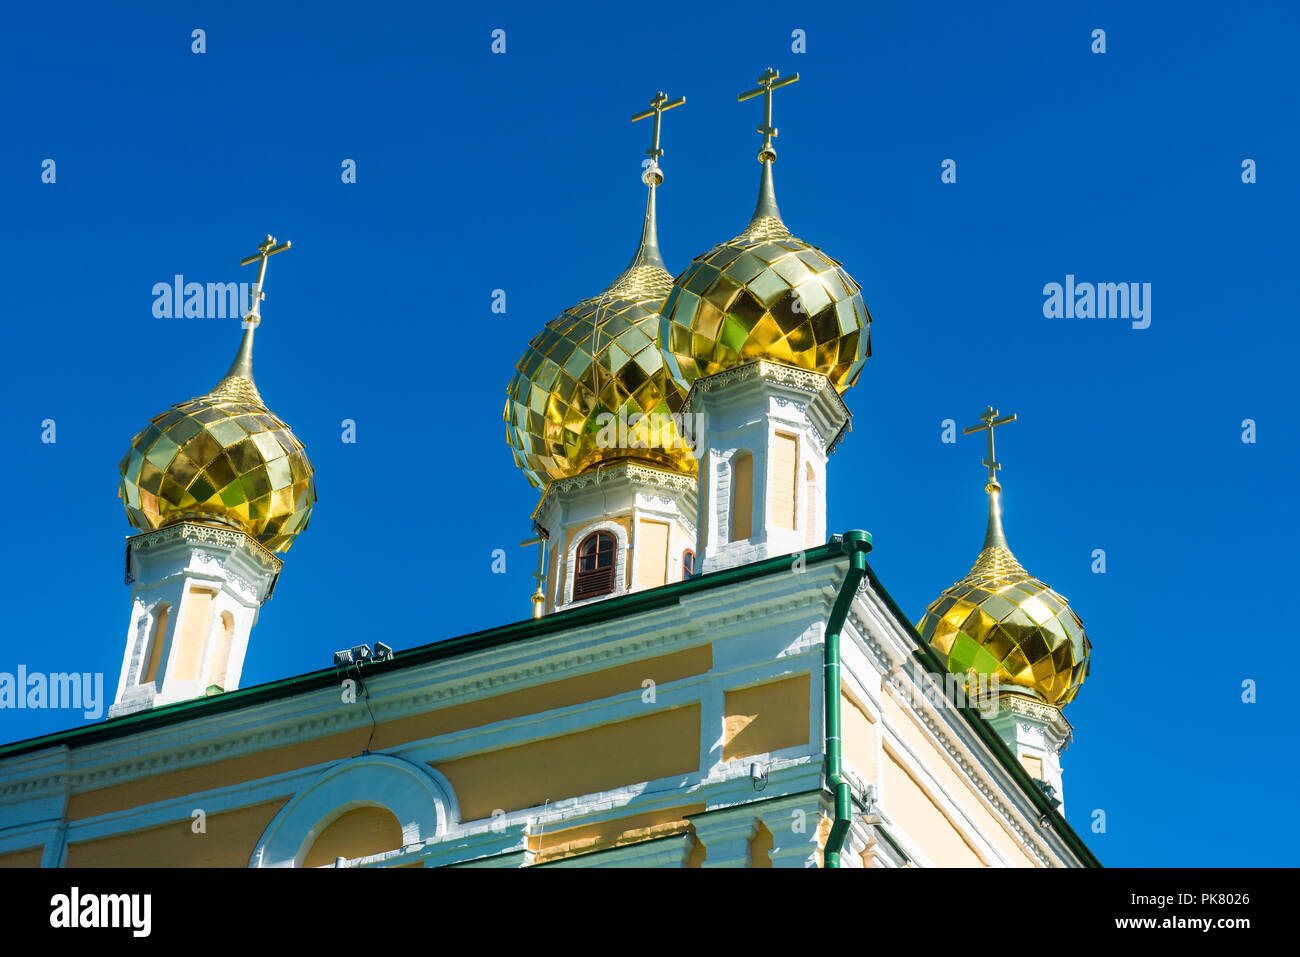 Chiesa ortodossa in Plyos sul fiume Volga, Golden ring, Russia Foto Stock